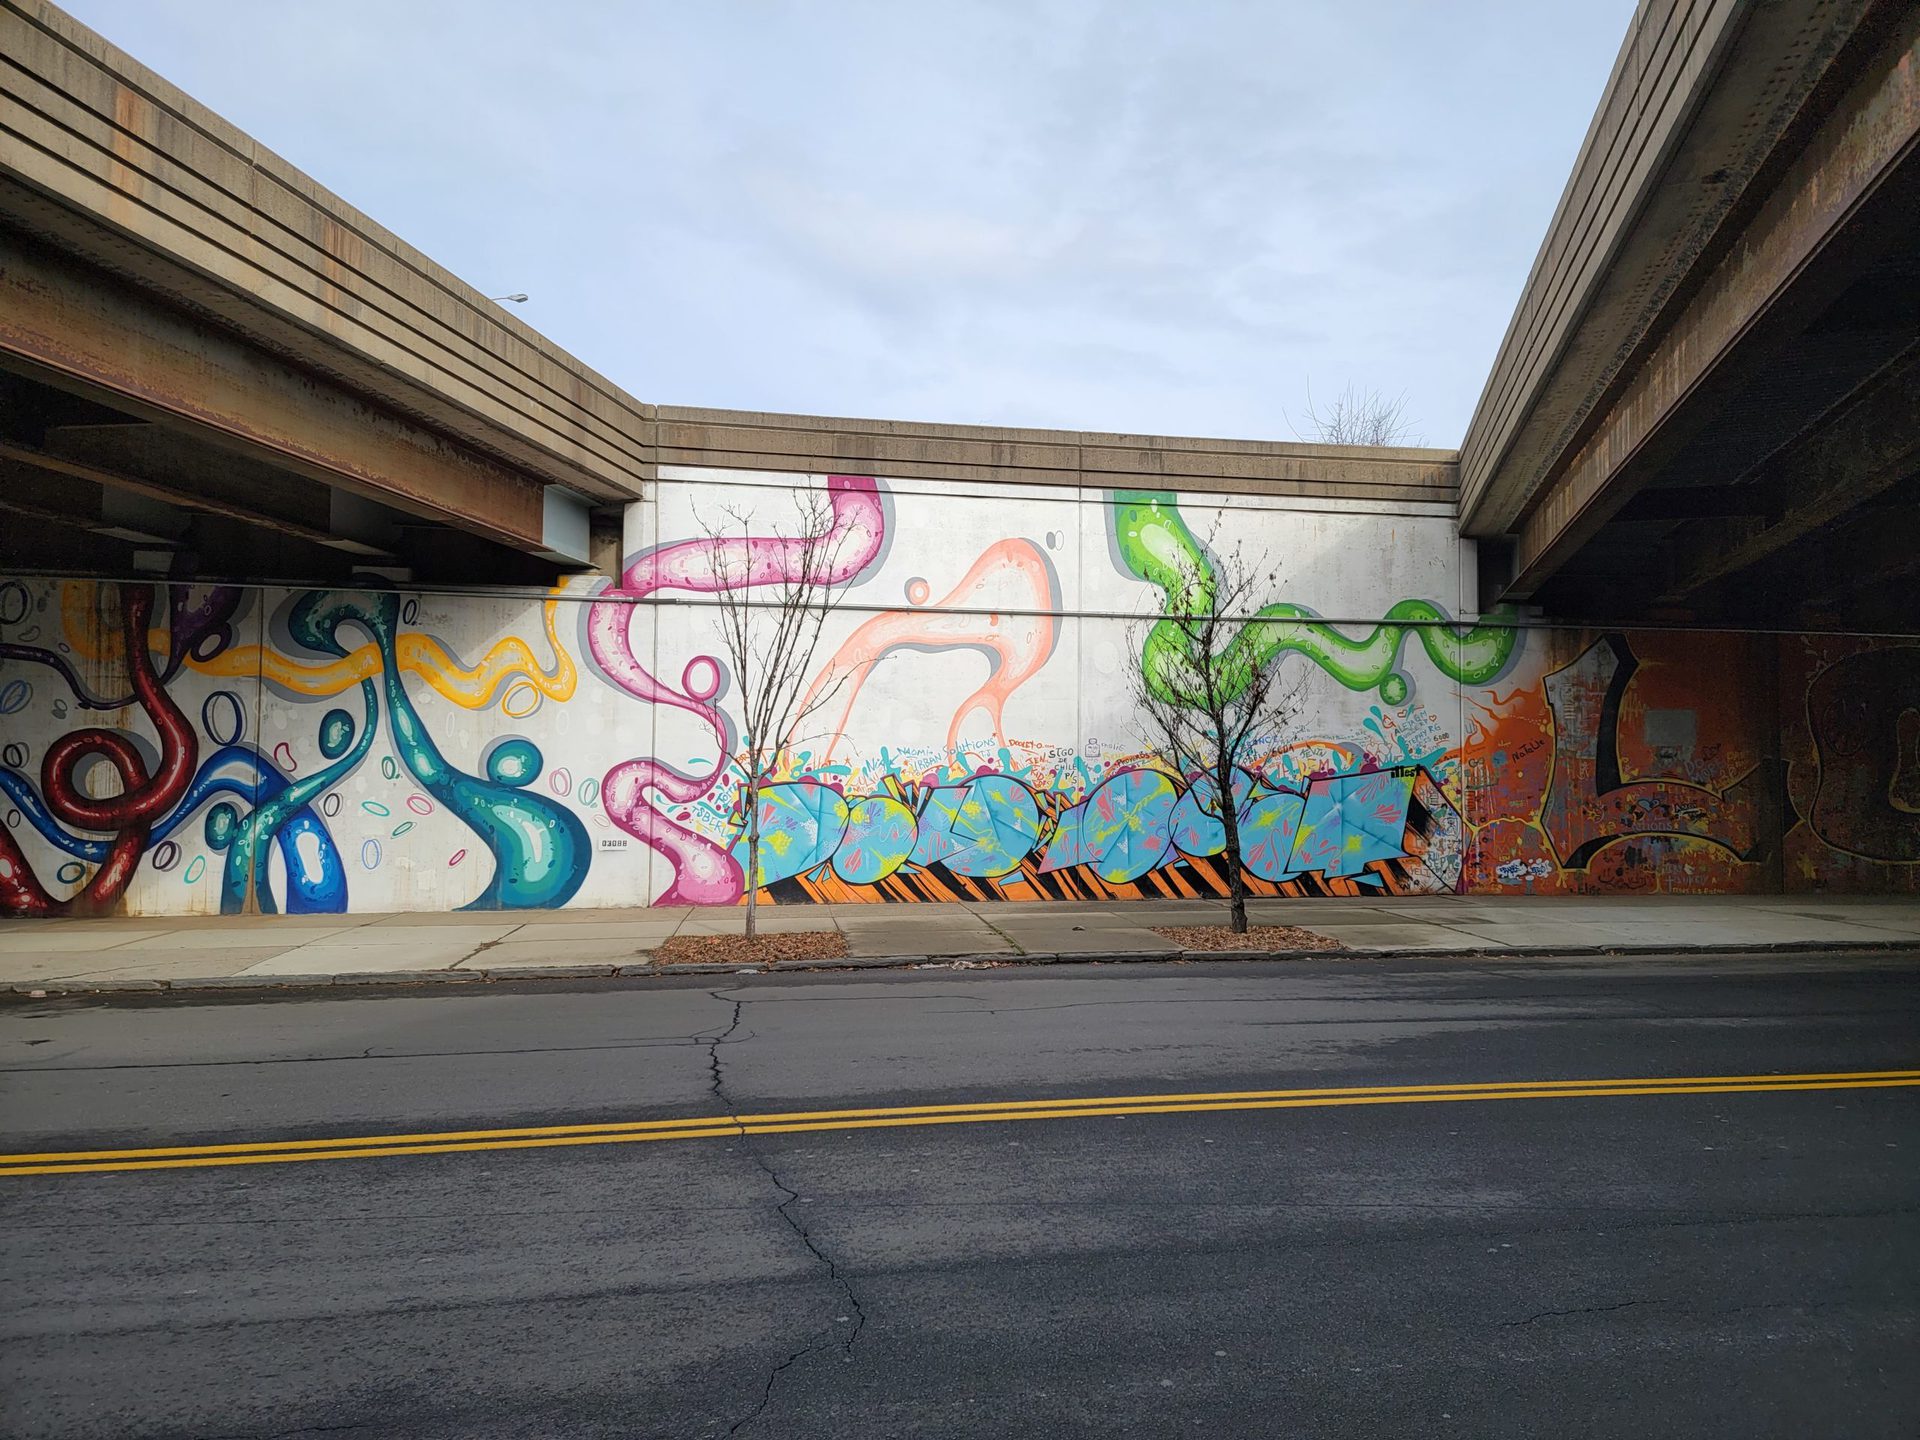 A graffiti underpass at 0x zoom.